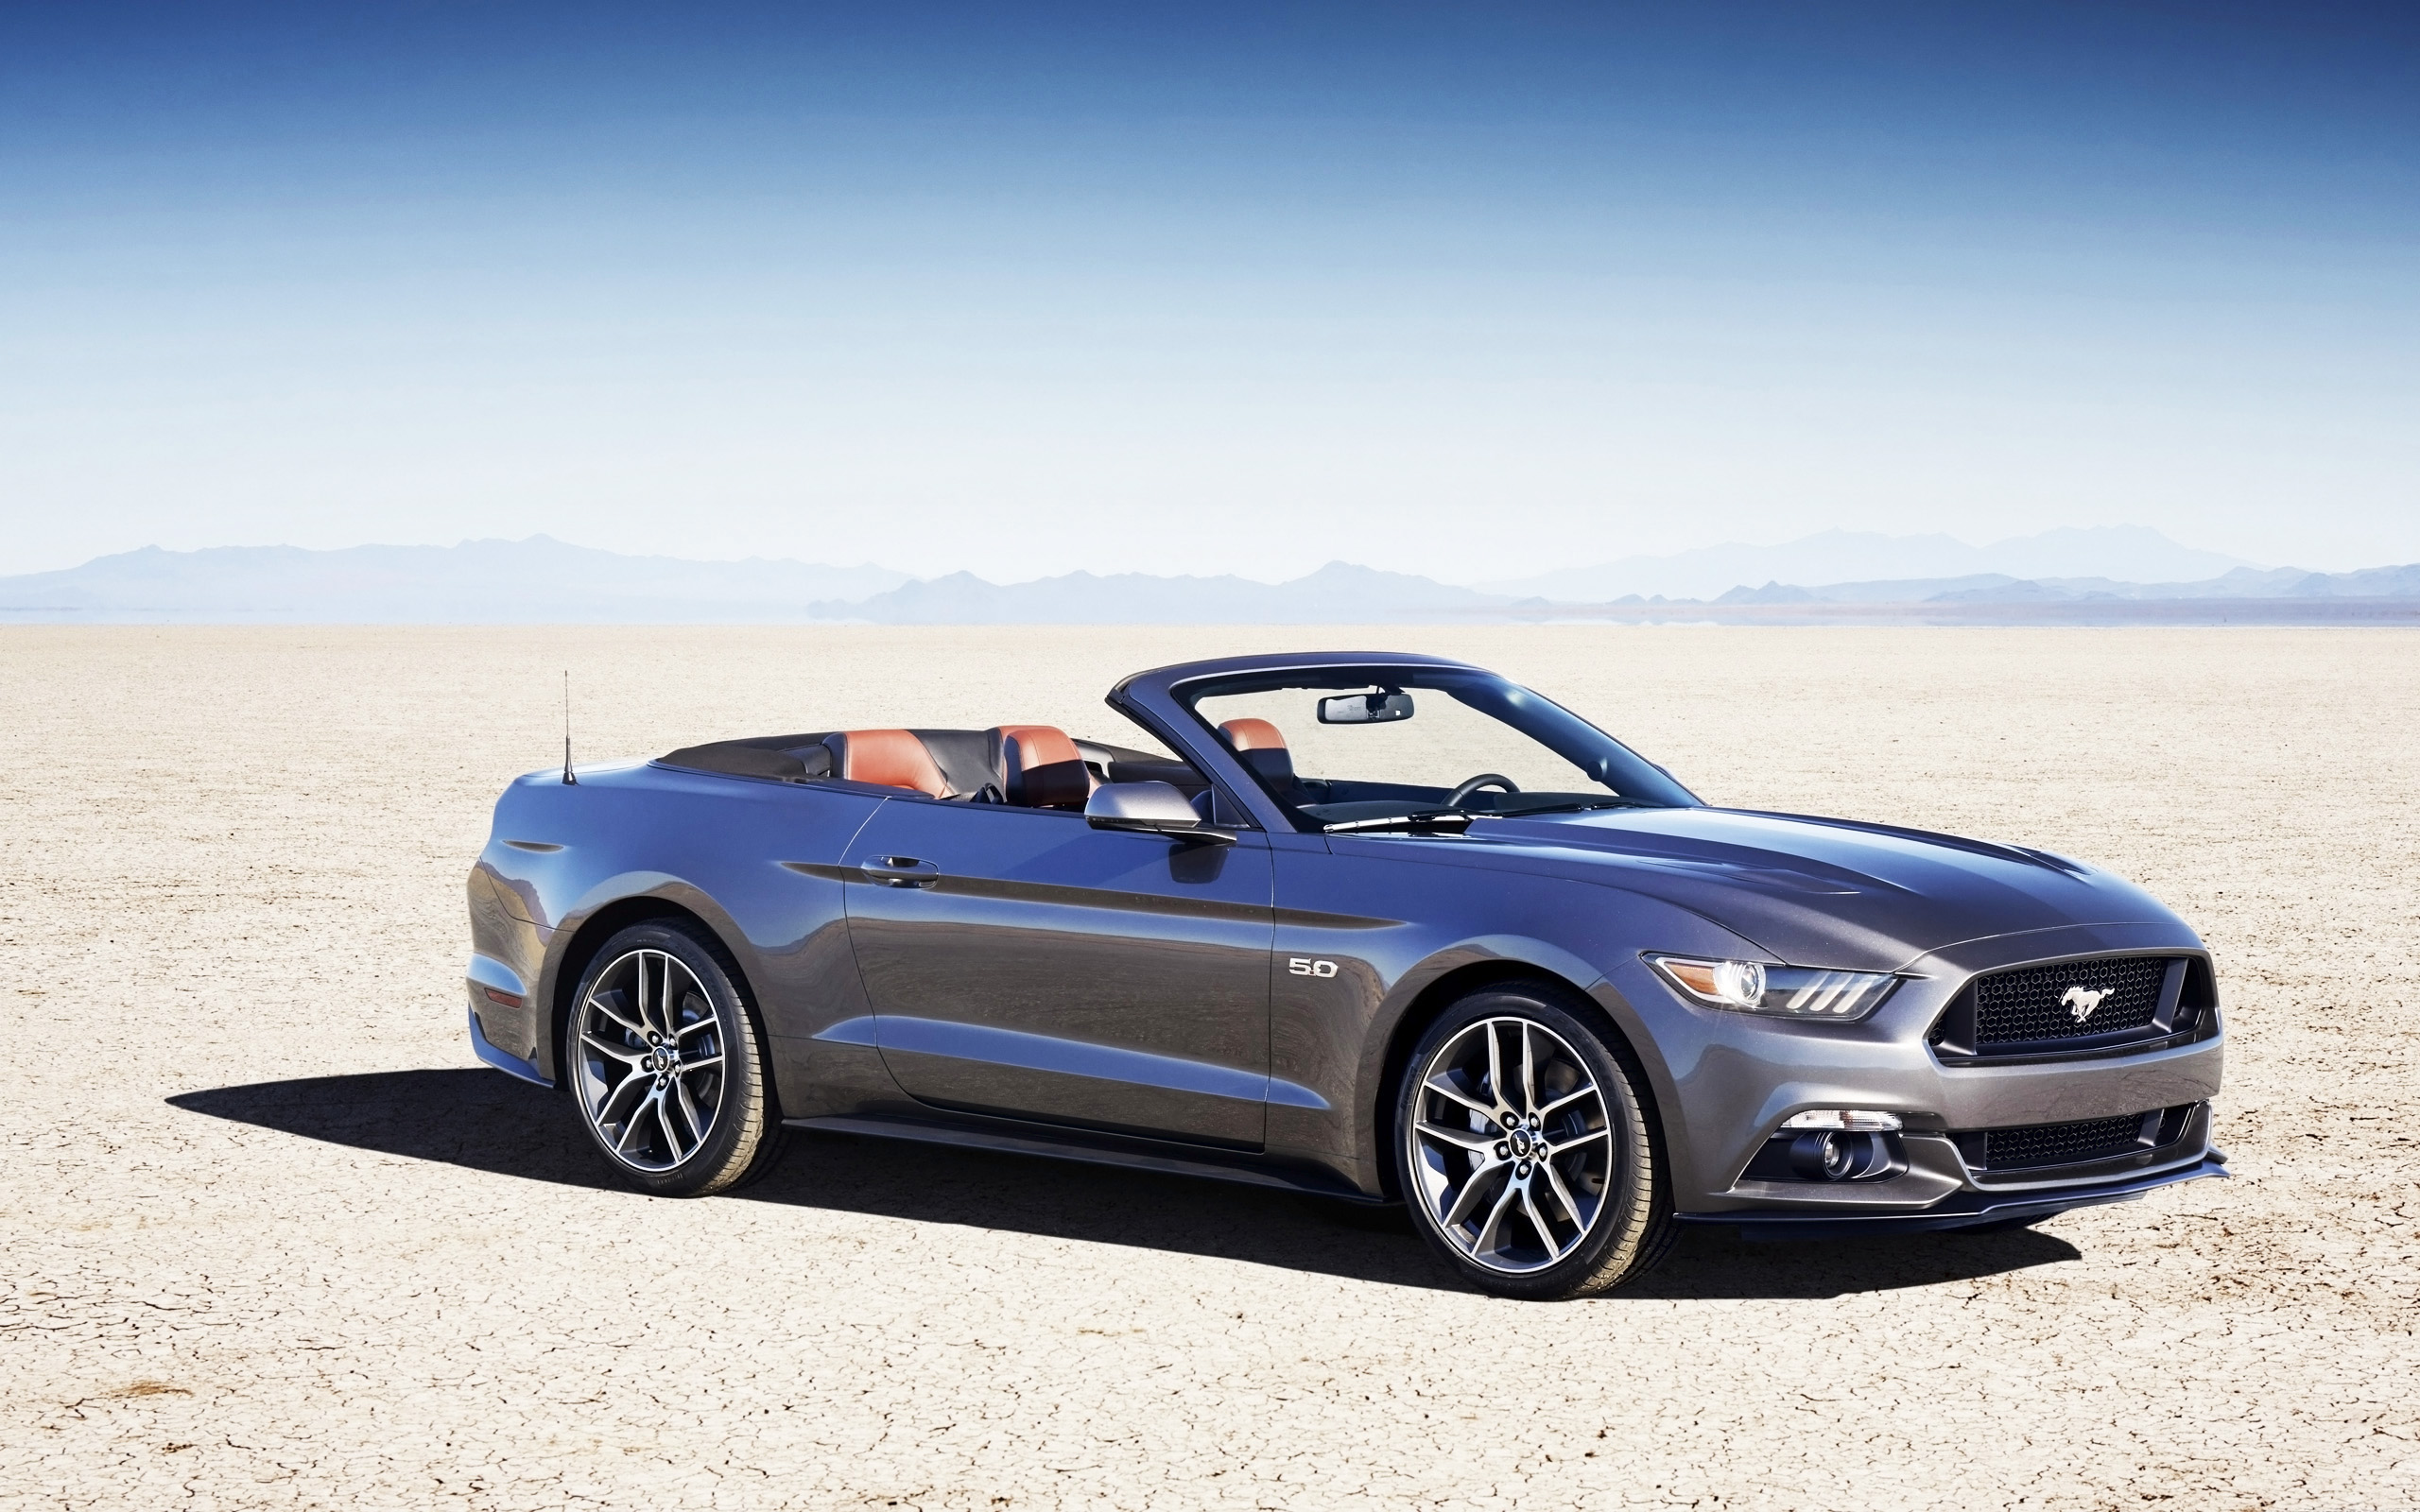 2015 Ford Mustang Convertible Wallpaper | HD Car Wallpapers | ID #4511